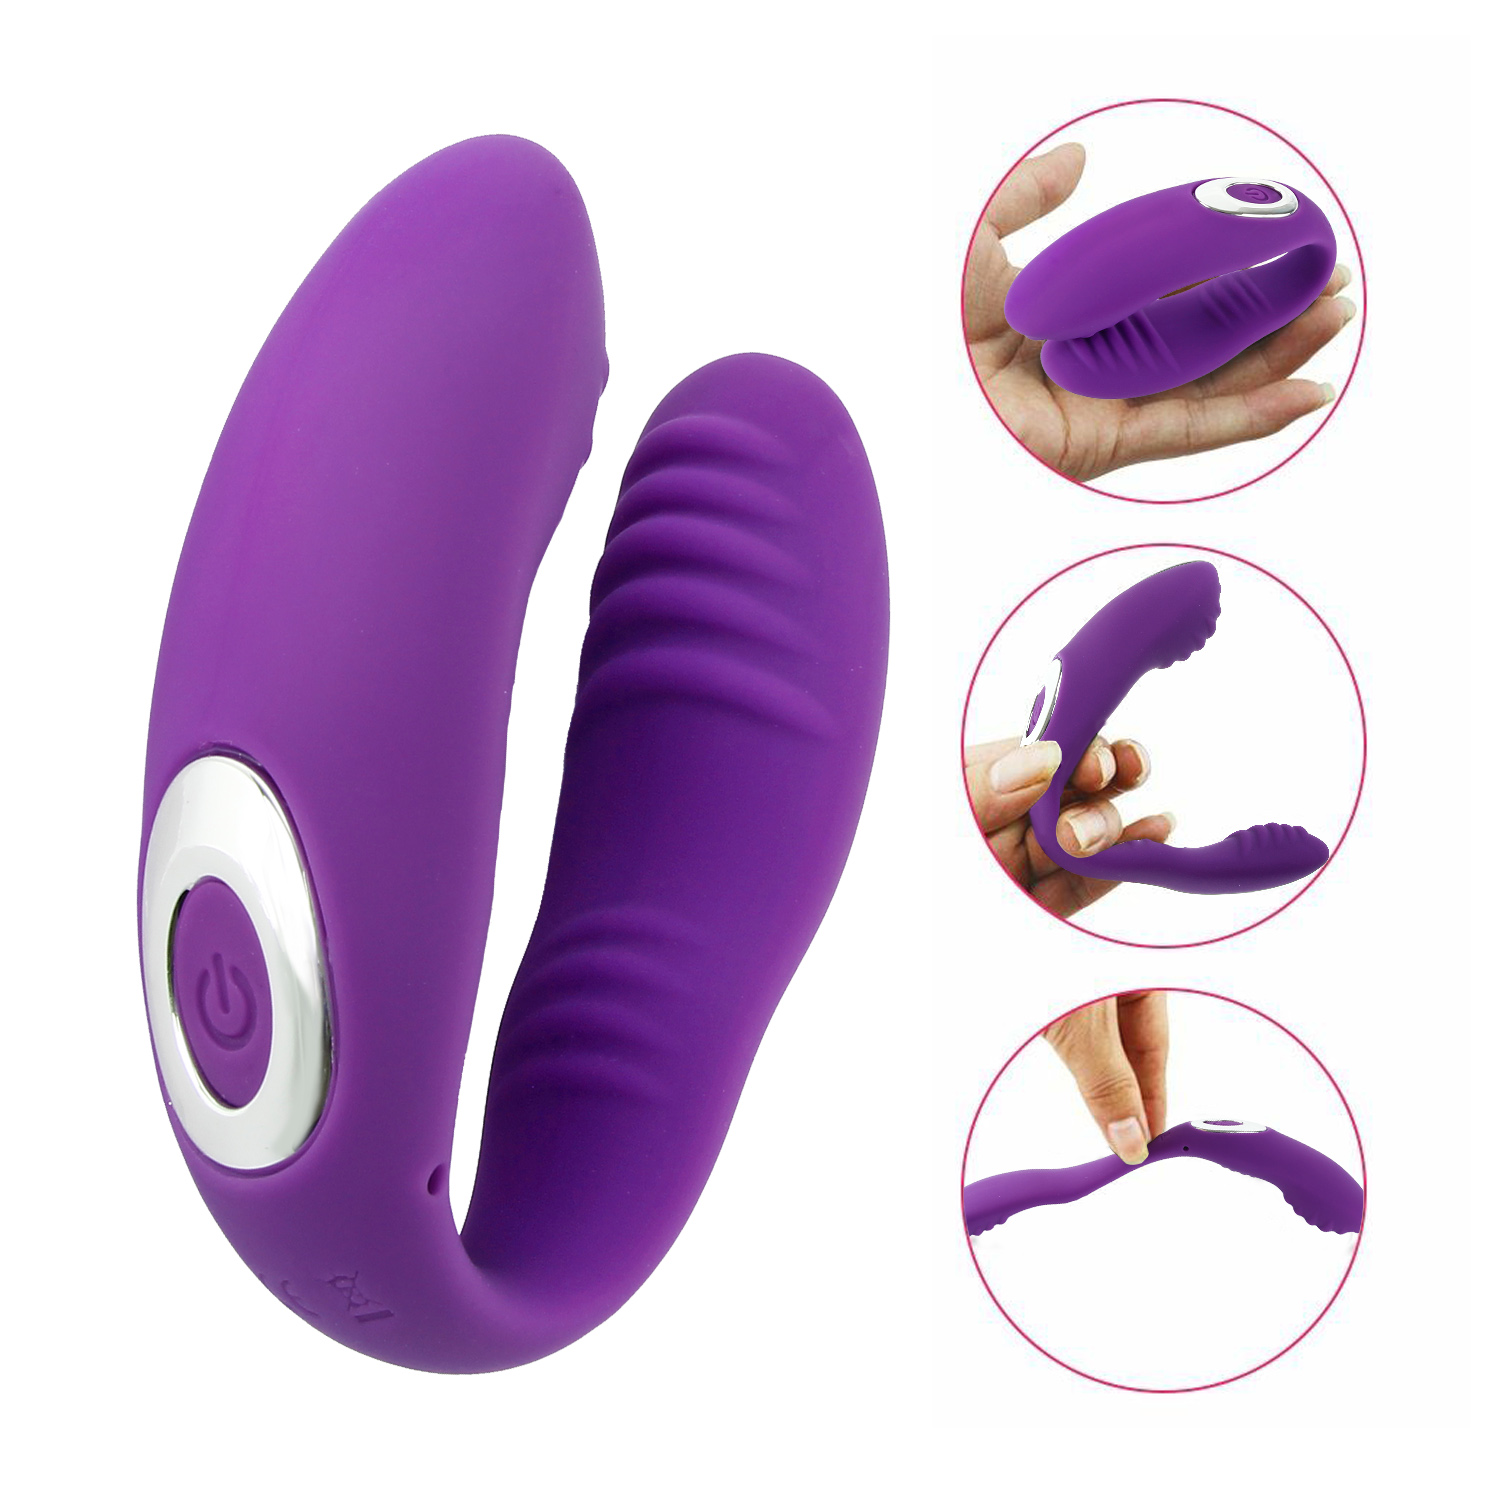 Rechargeable Vibrator Double Ended Dildo G Spot Anal Massager For Women